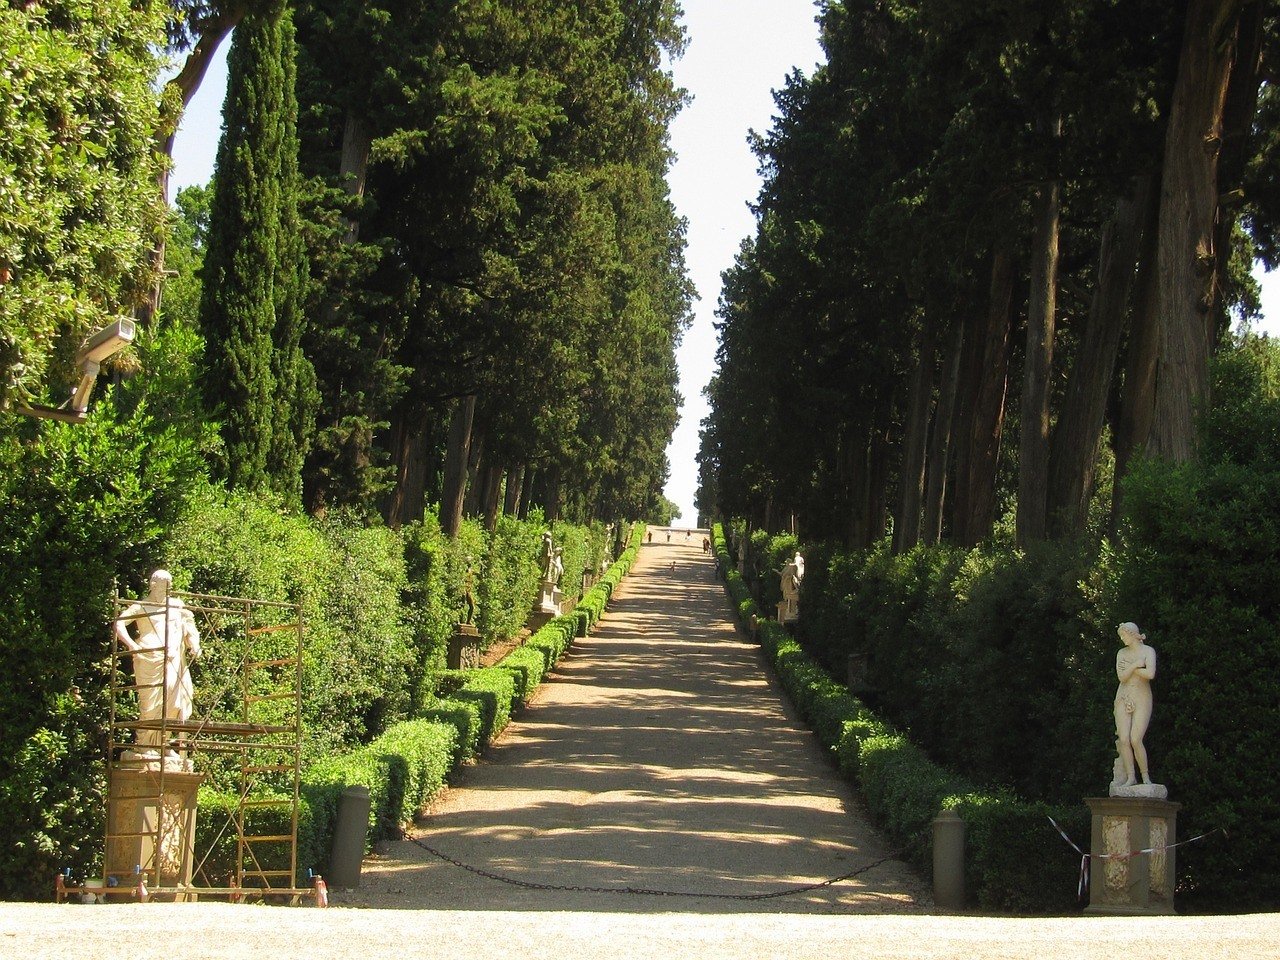 The Boboli Gardens